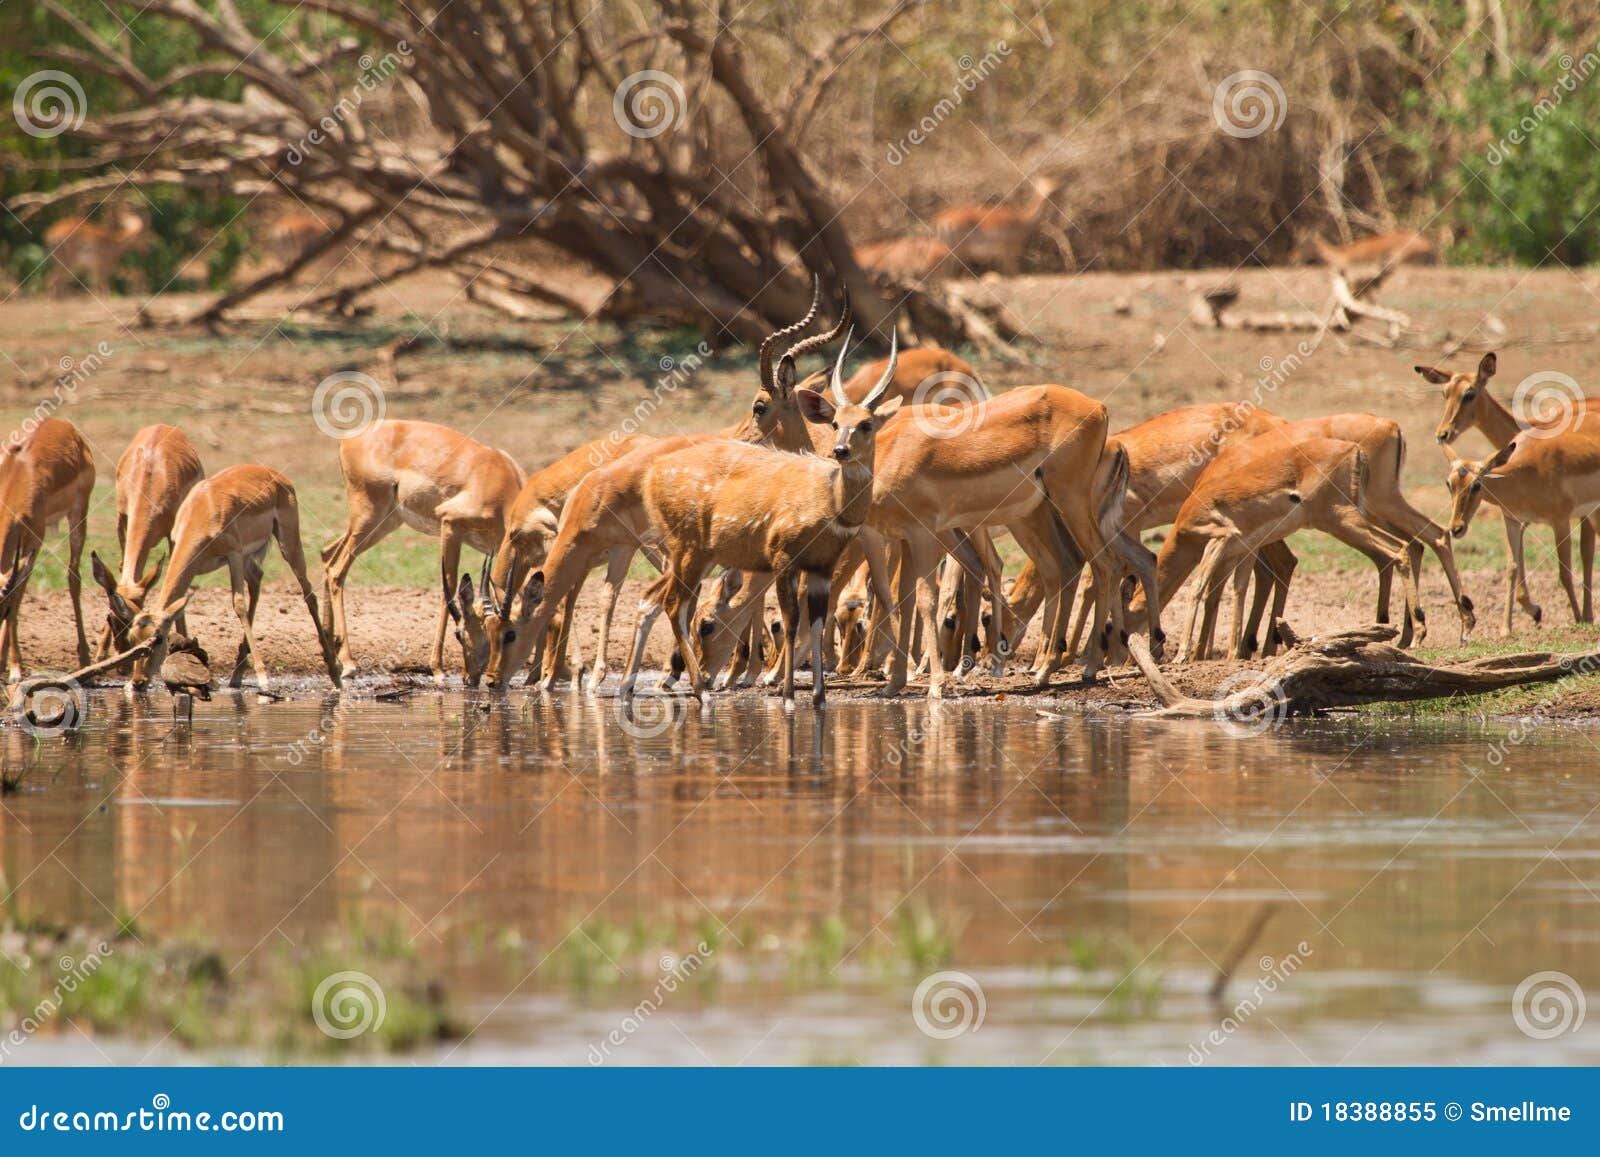 impala antelopes